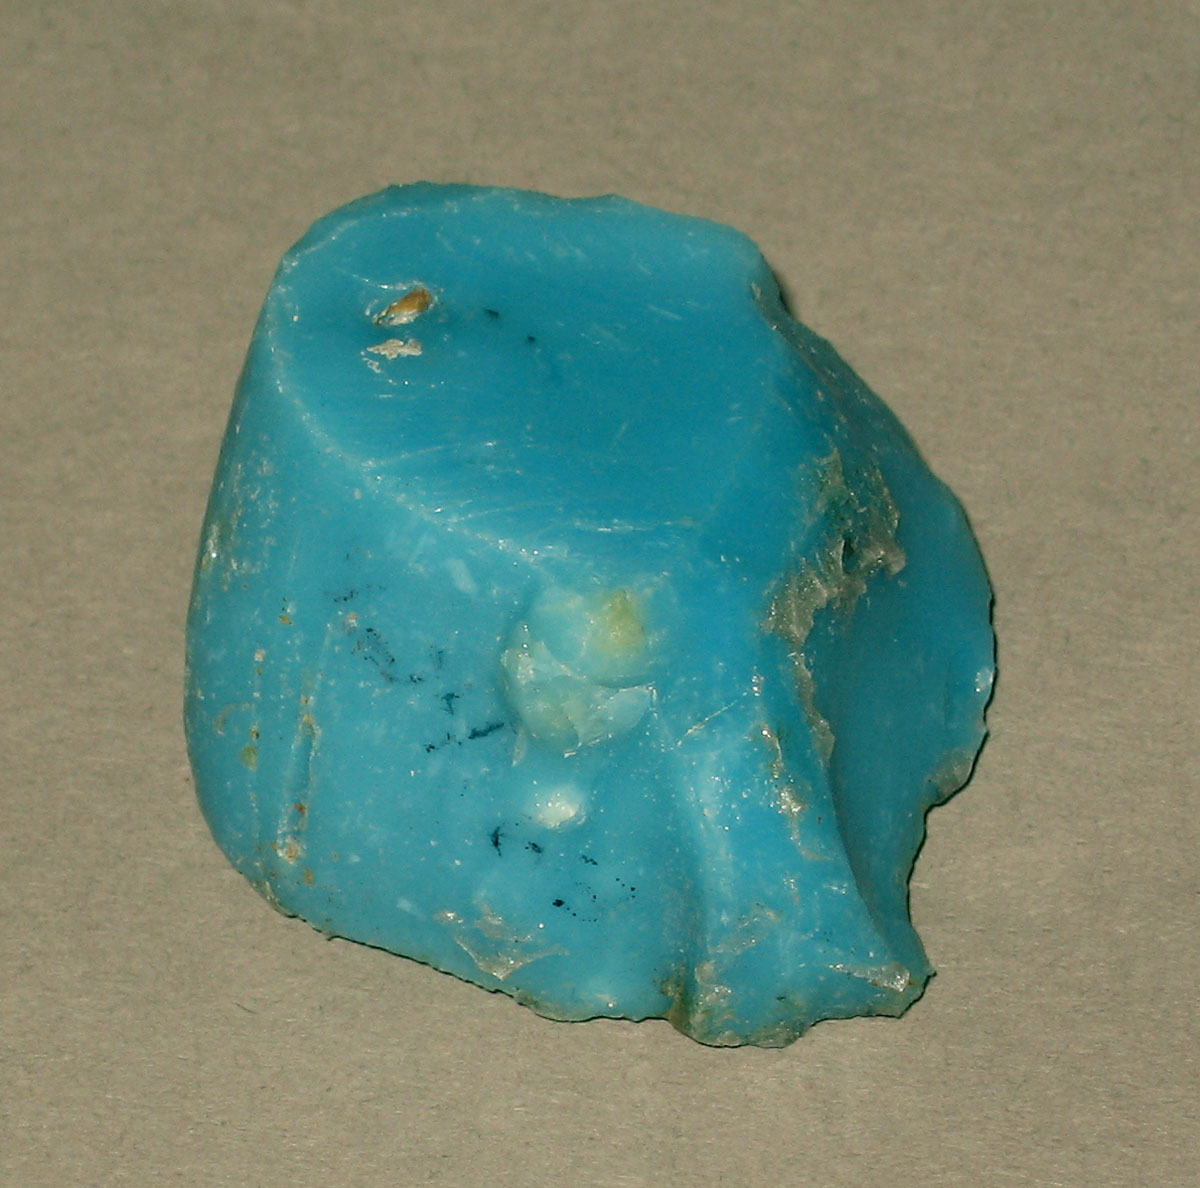 1971.0024.060 Glass fragment